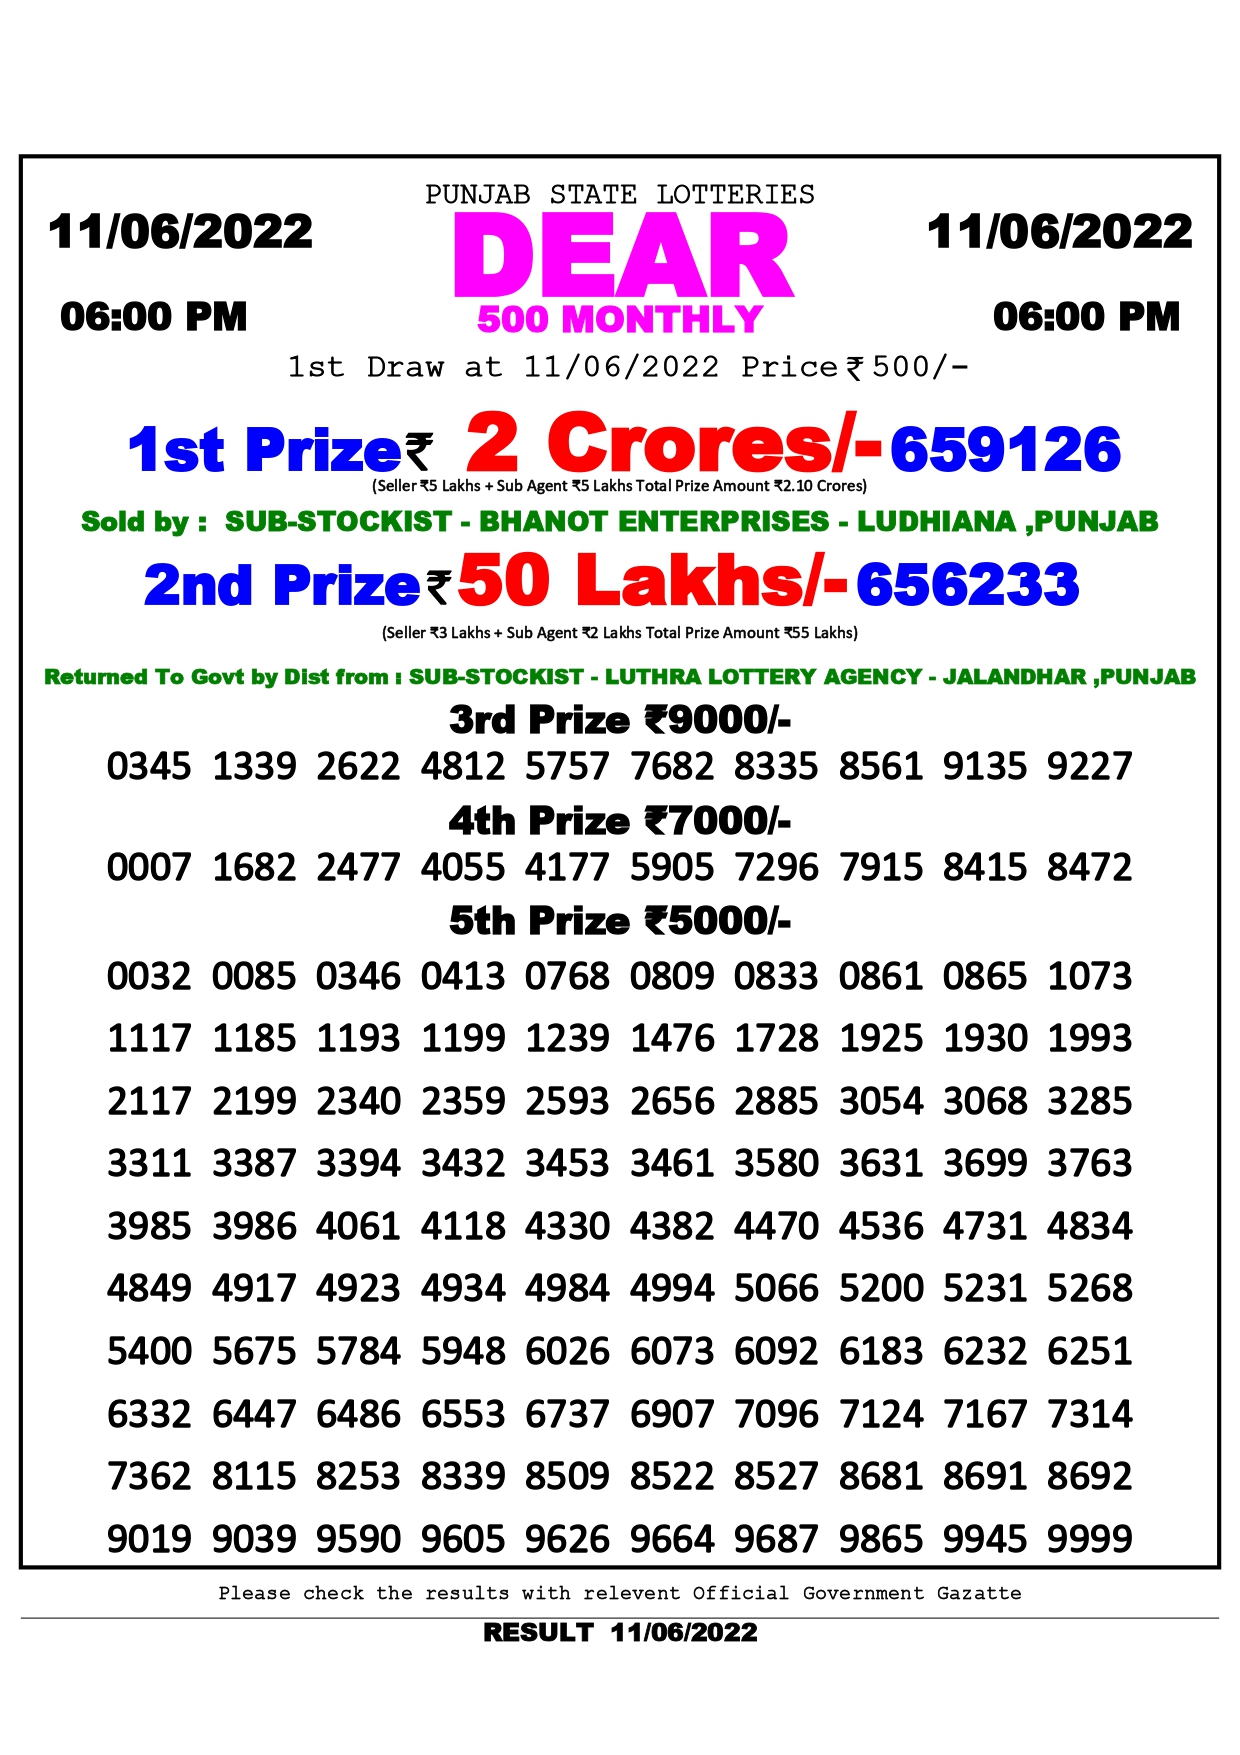 Punjab Dear 500 Monthly 6 PM Draw PDF - M5110622